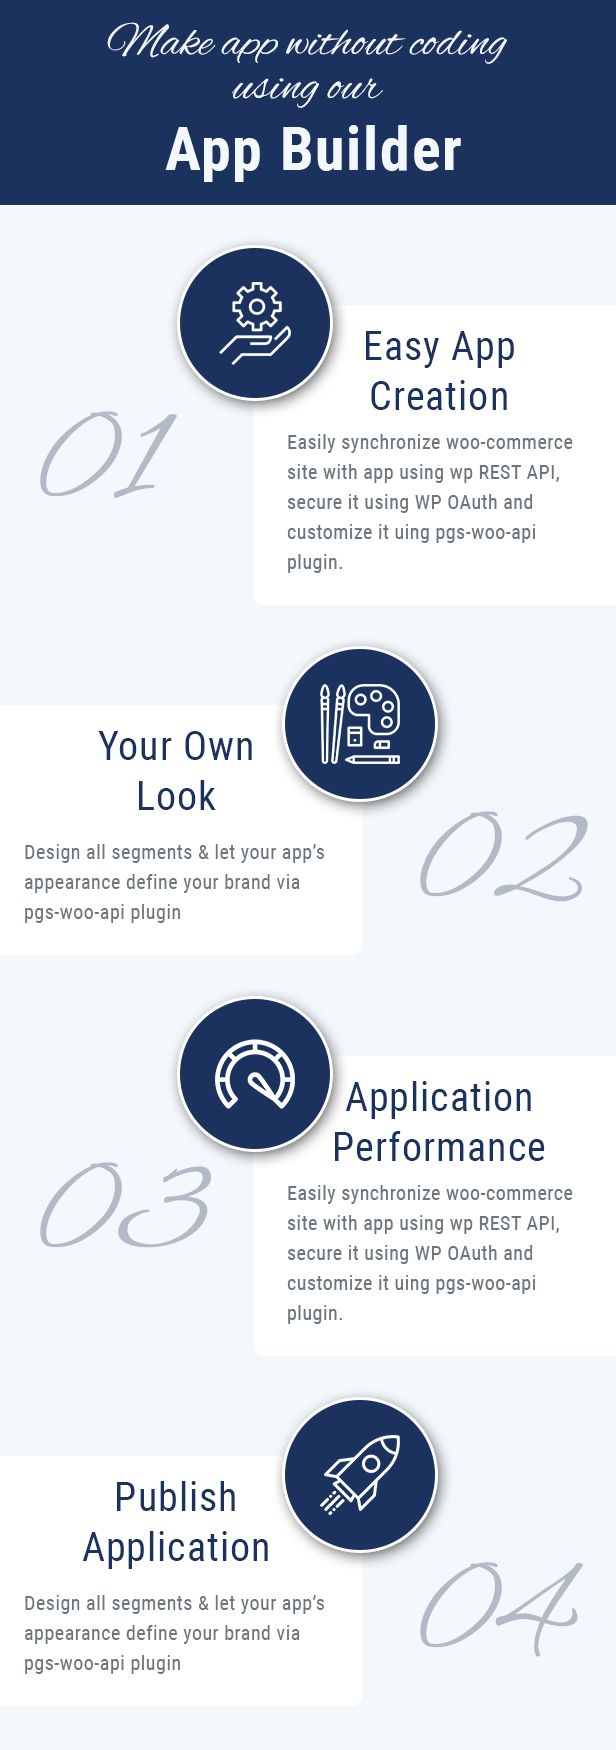 CiyaShop Native Android Application based on WooCommerce - 17